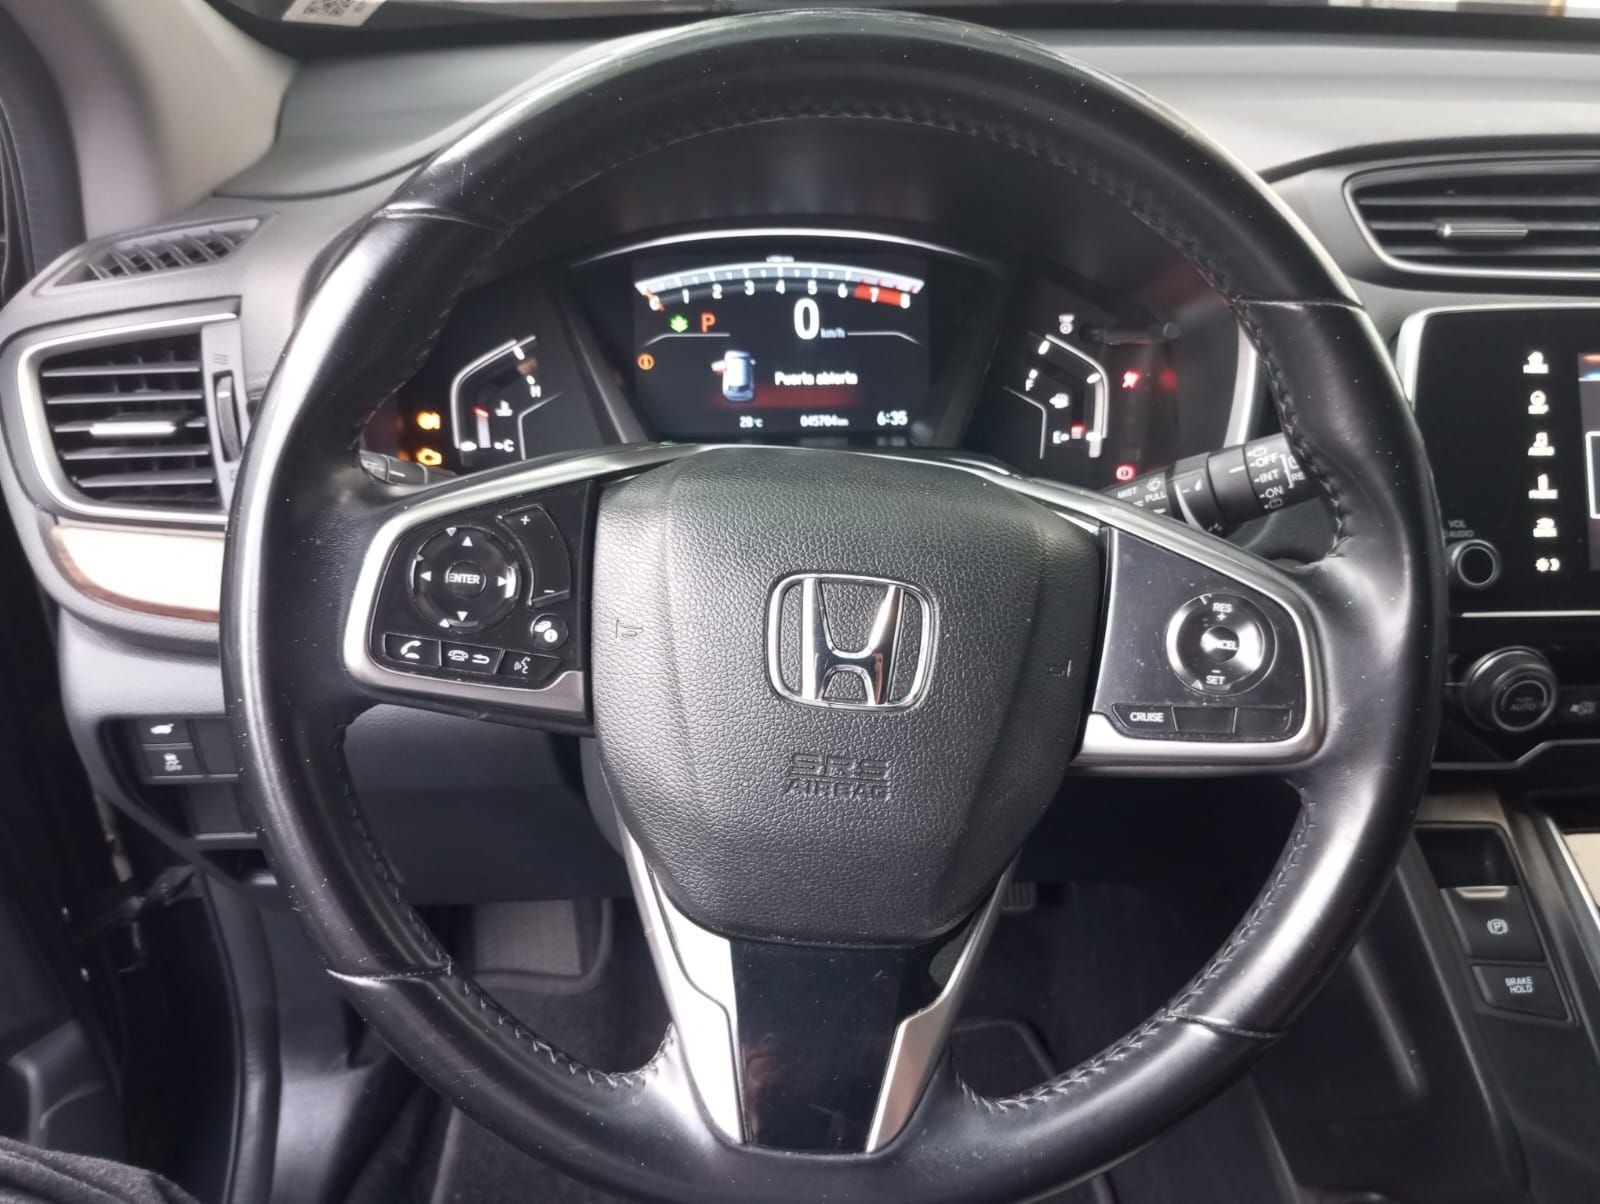 2019 Honda CR-V 1.5 Touring Piel Cvt